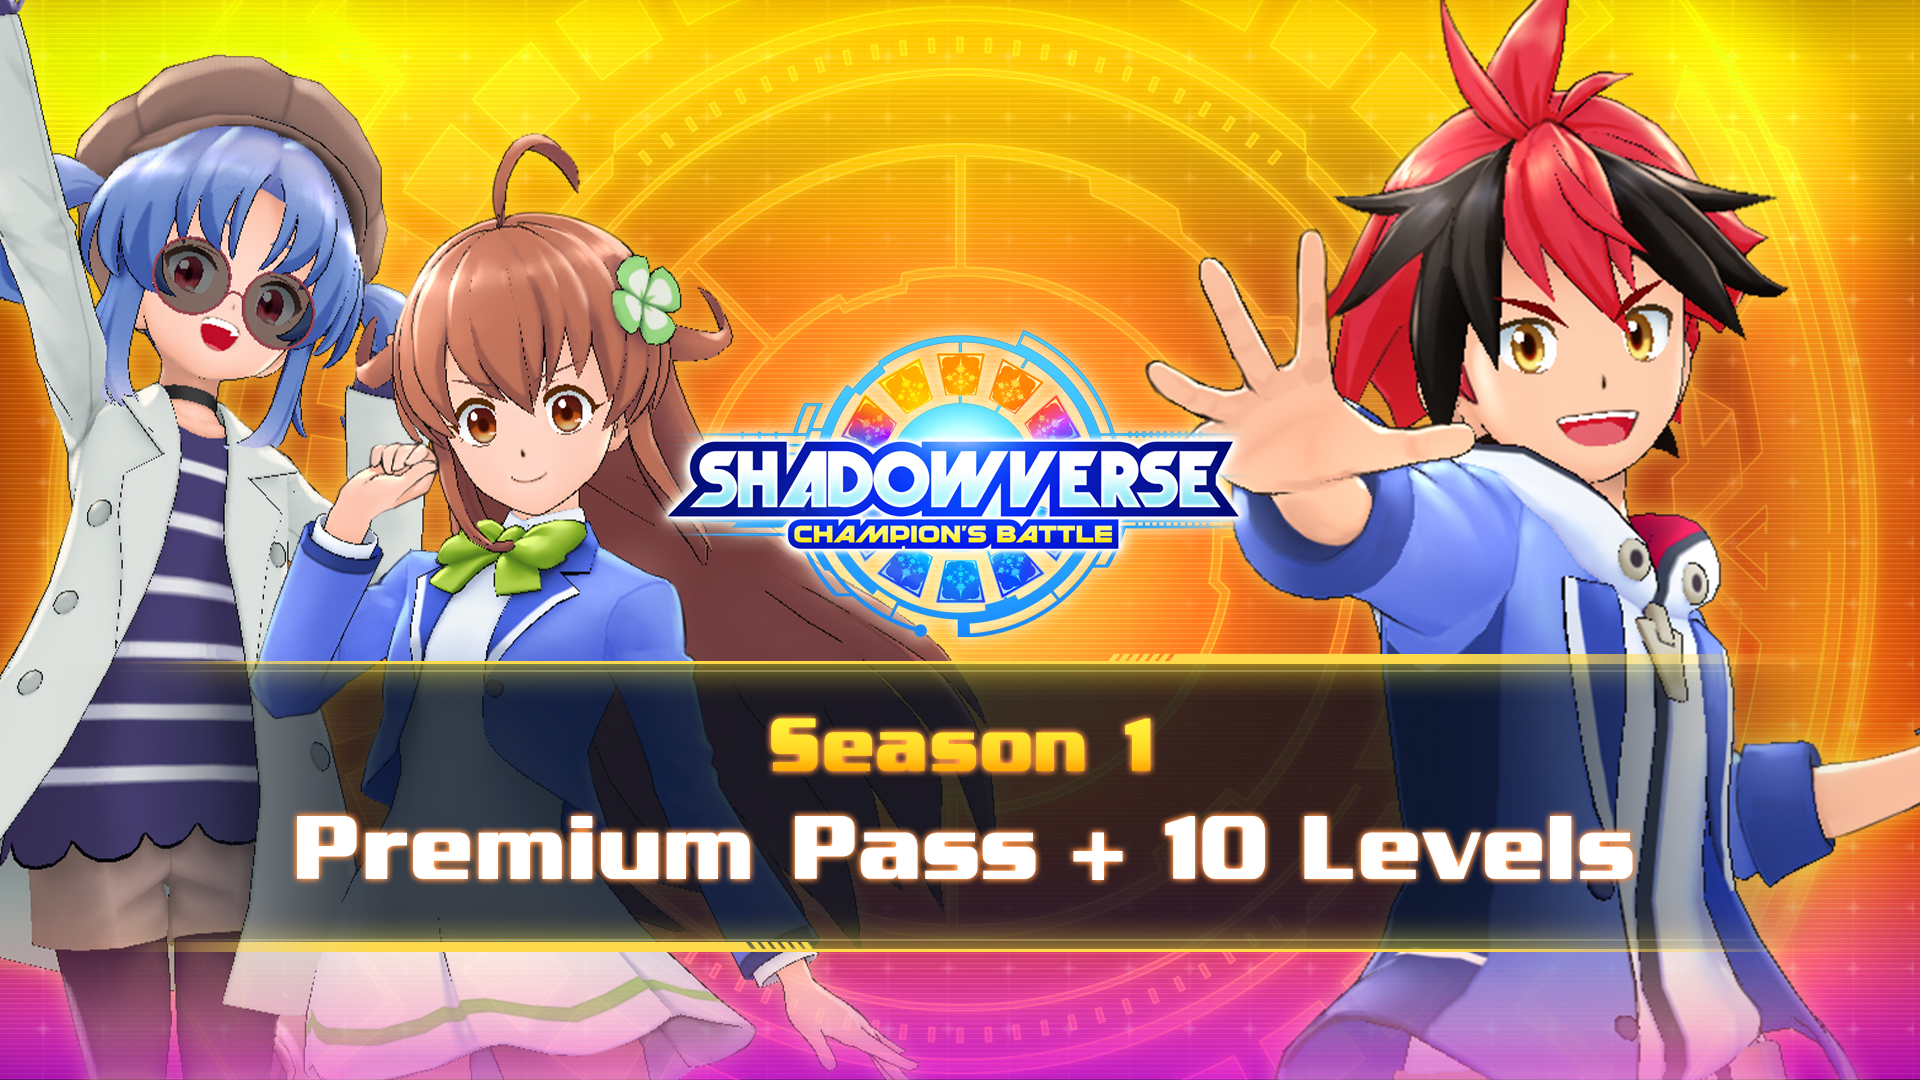 Season 1 Premium Pass + 10 Levels